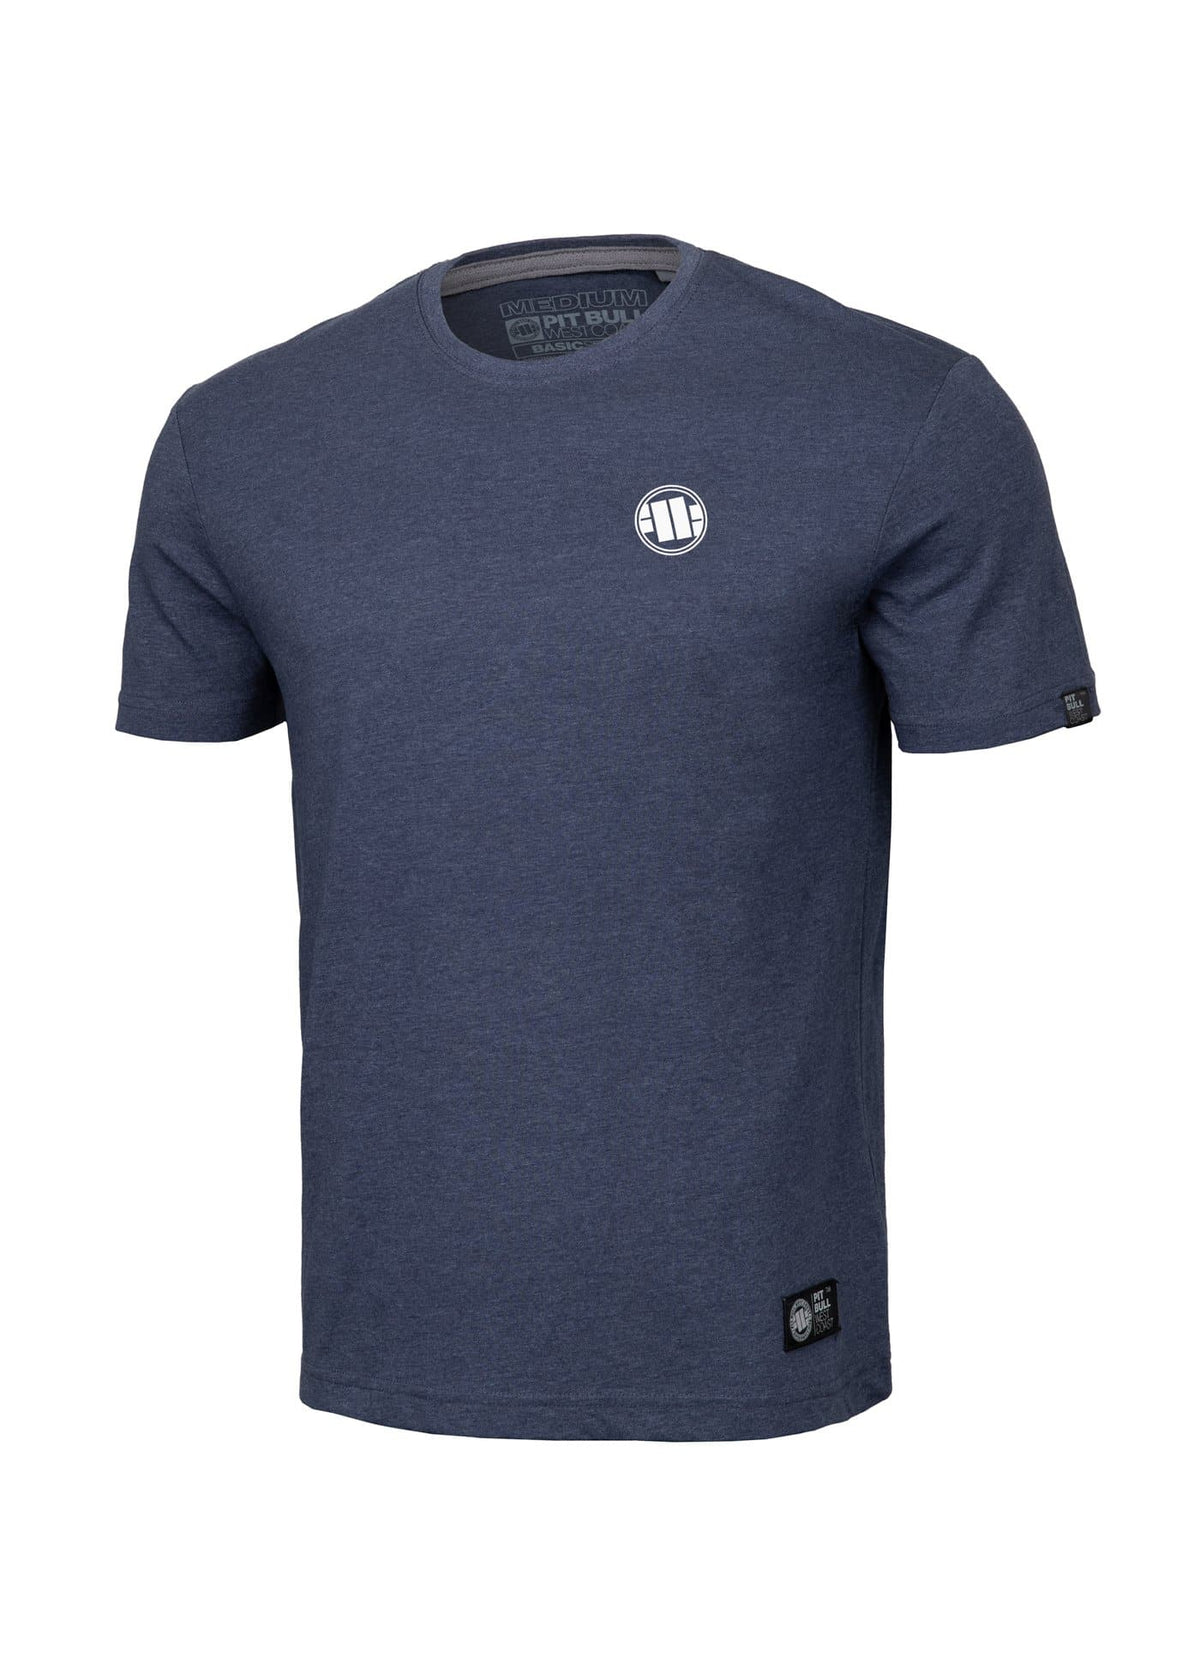 T-Shirt SMALL LOGO 21 Navy Melange - Pitbull West Coast International Store 